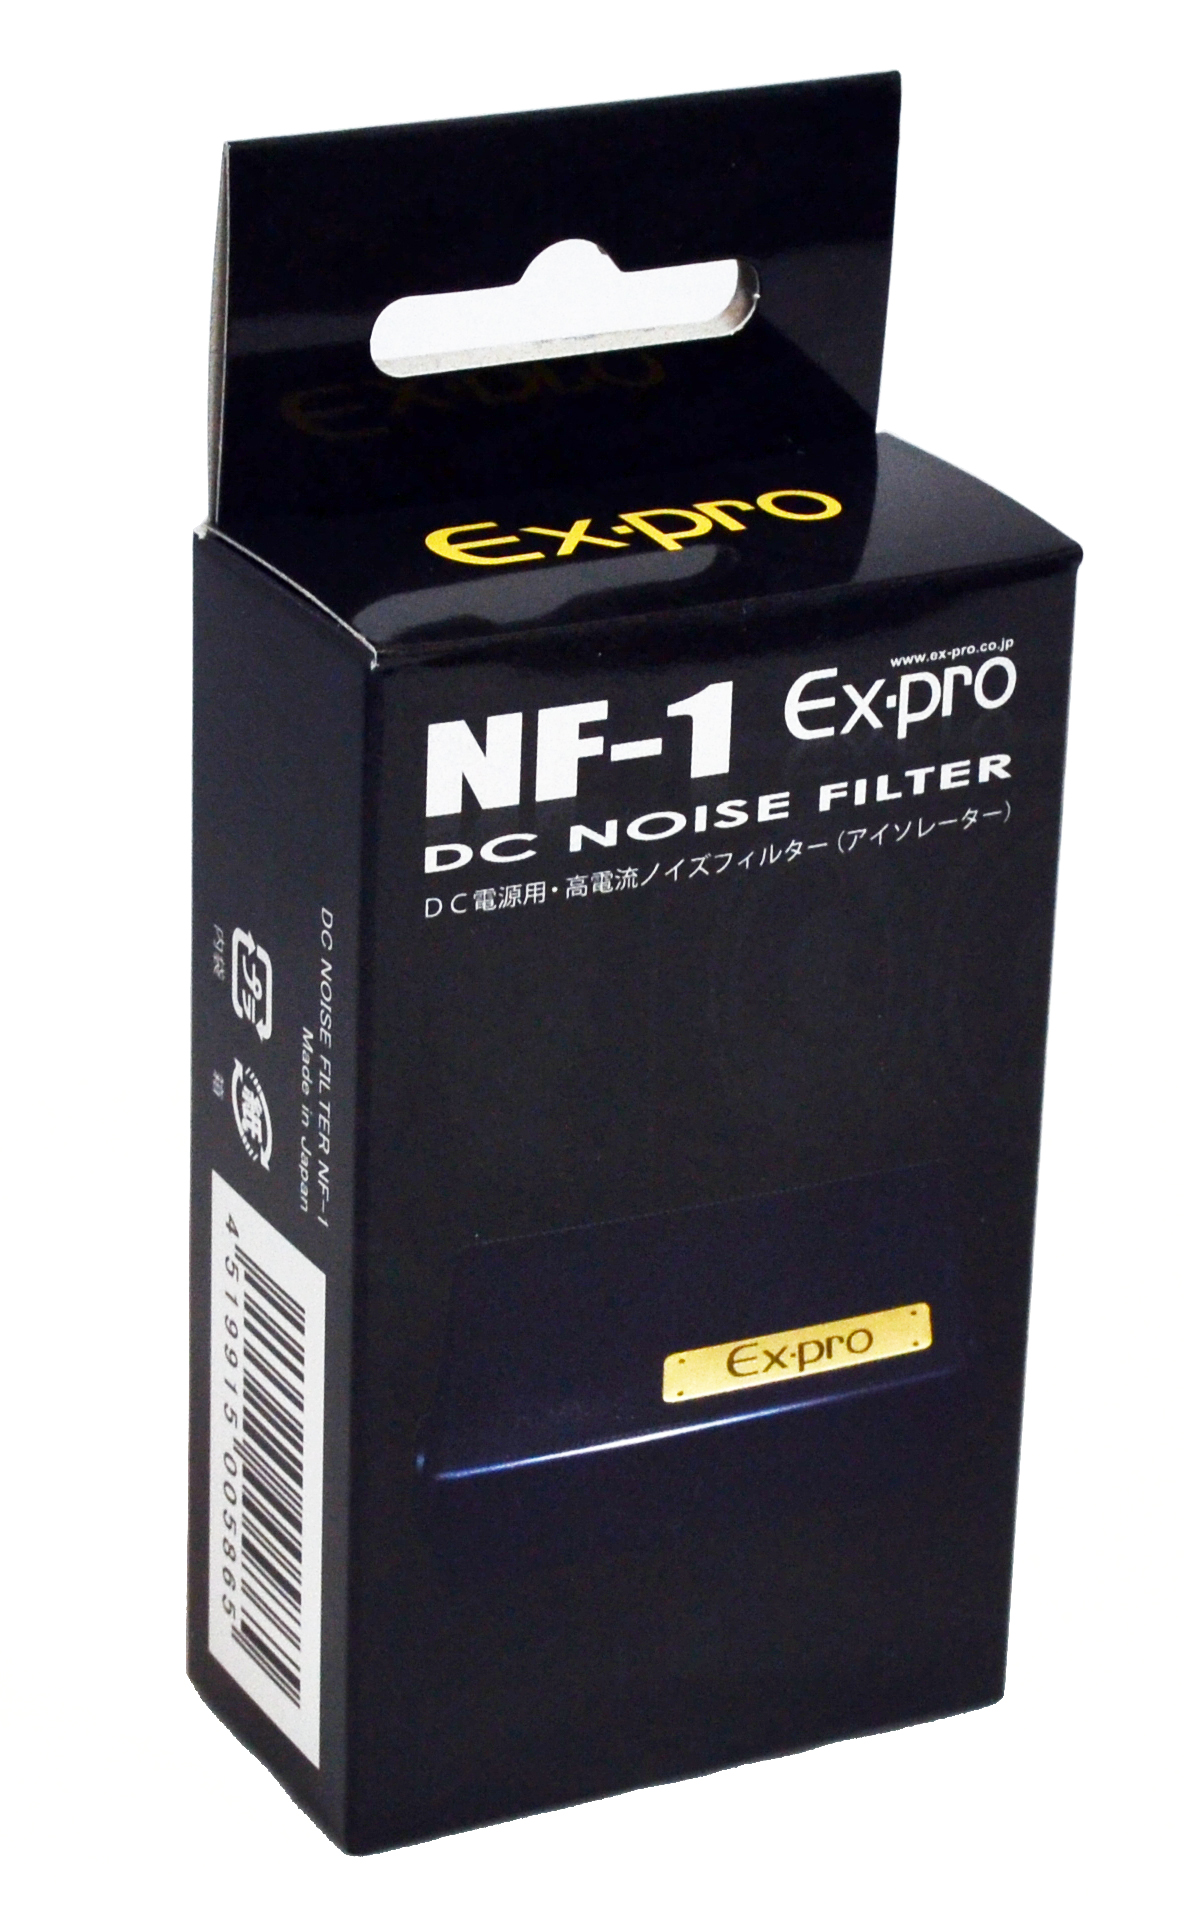 Ex-pro: NF-1